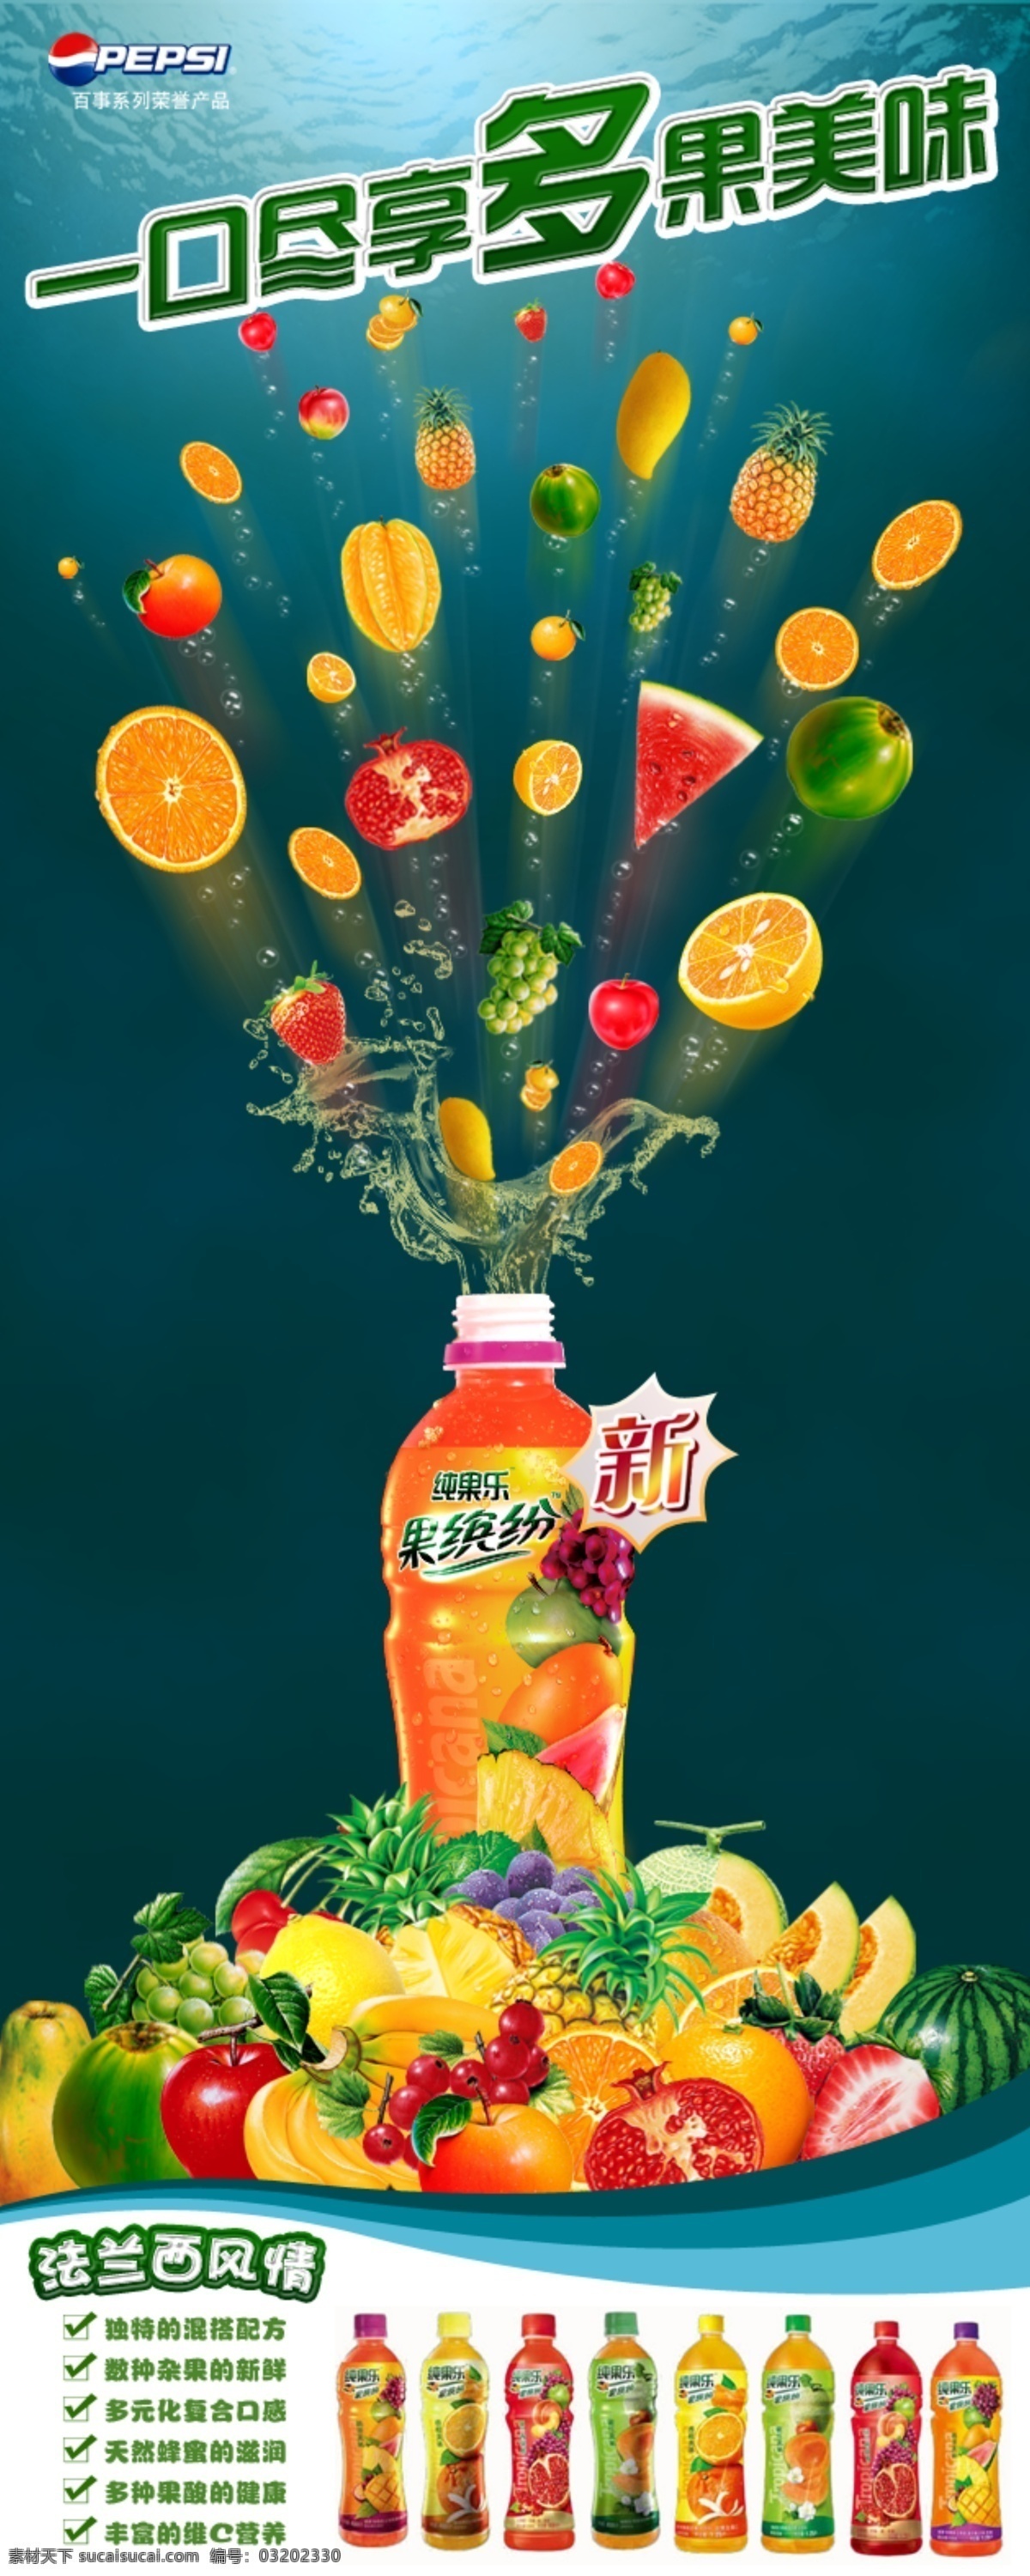 dm宣传单 菠萝 橙汁 橙子 广告 广告设计模板 桔子 水果 西瓜 纯 果 乐 易拉宝 饮料 模板下载 纯果乐 果缤纷 源文件 展板 易拉宝设计